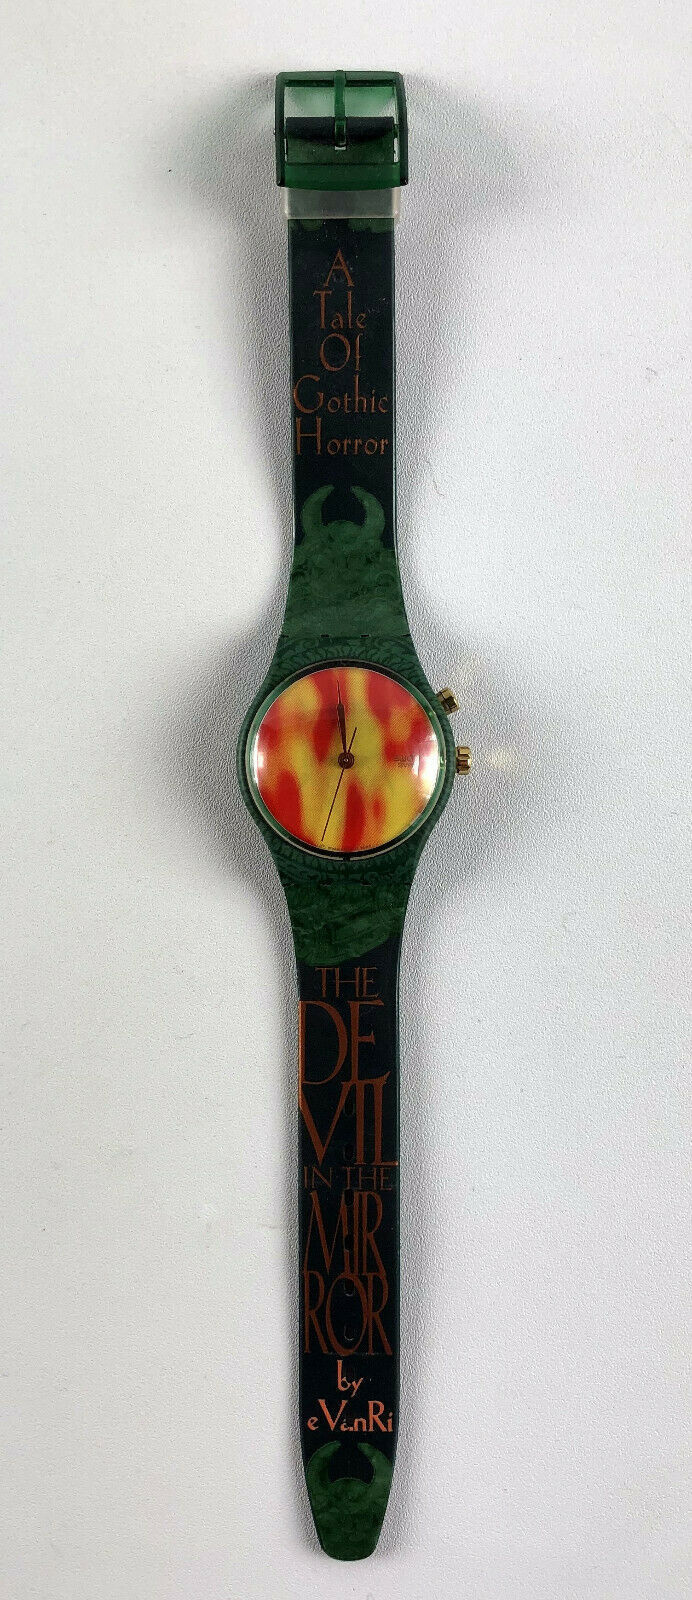 Swatch Watch Devil In The Mirror 1998 E Van Ri - GG900 - * NOT WORKING * - $29.69